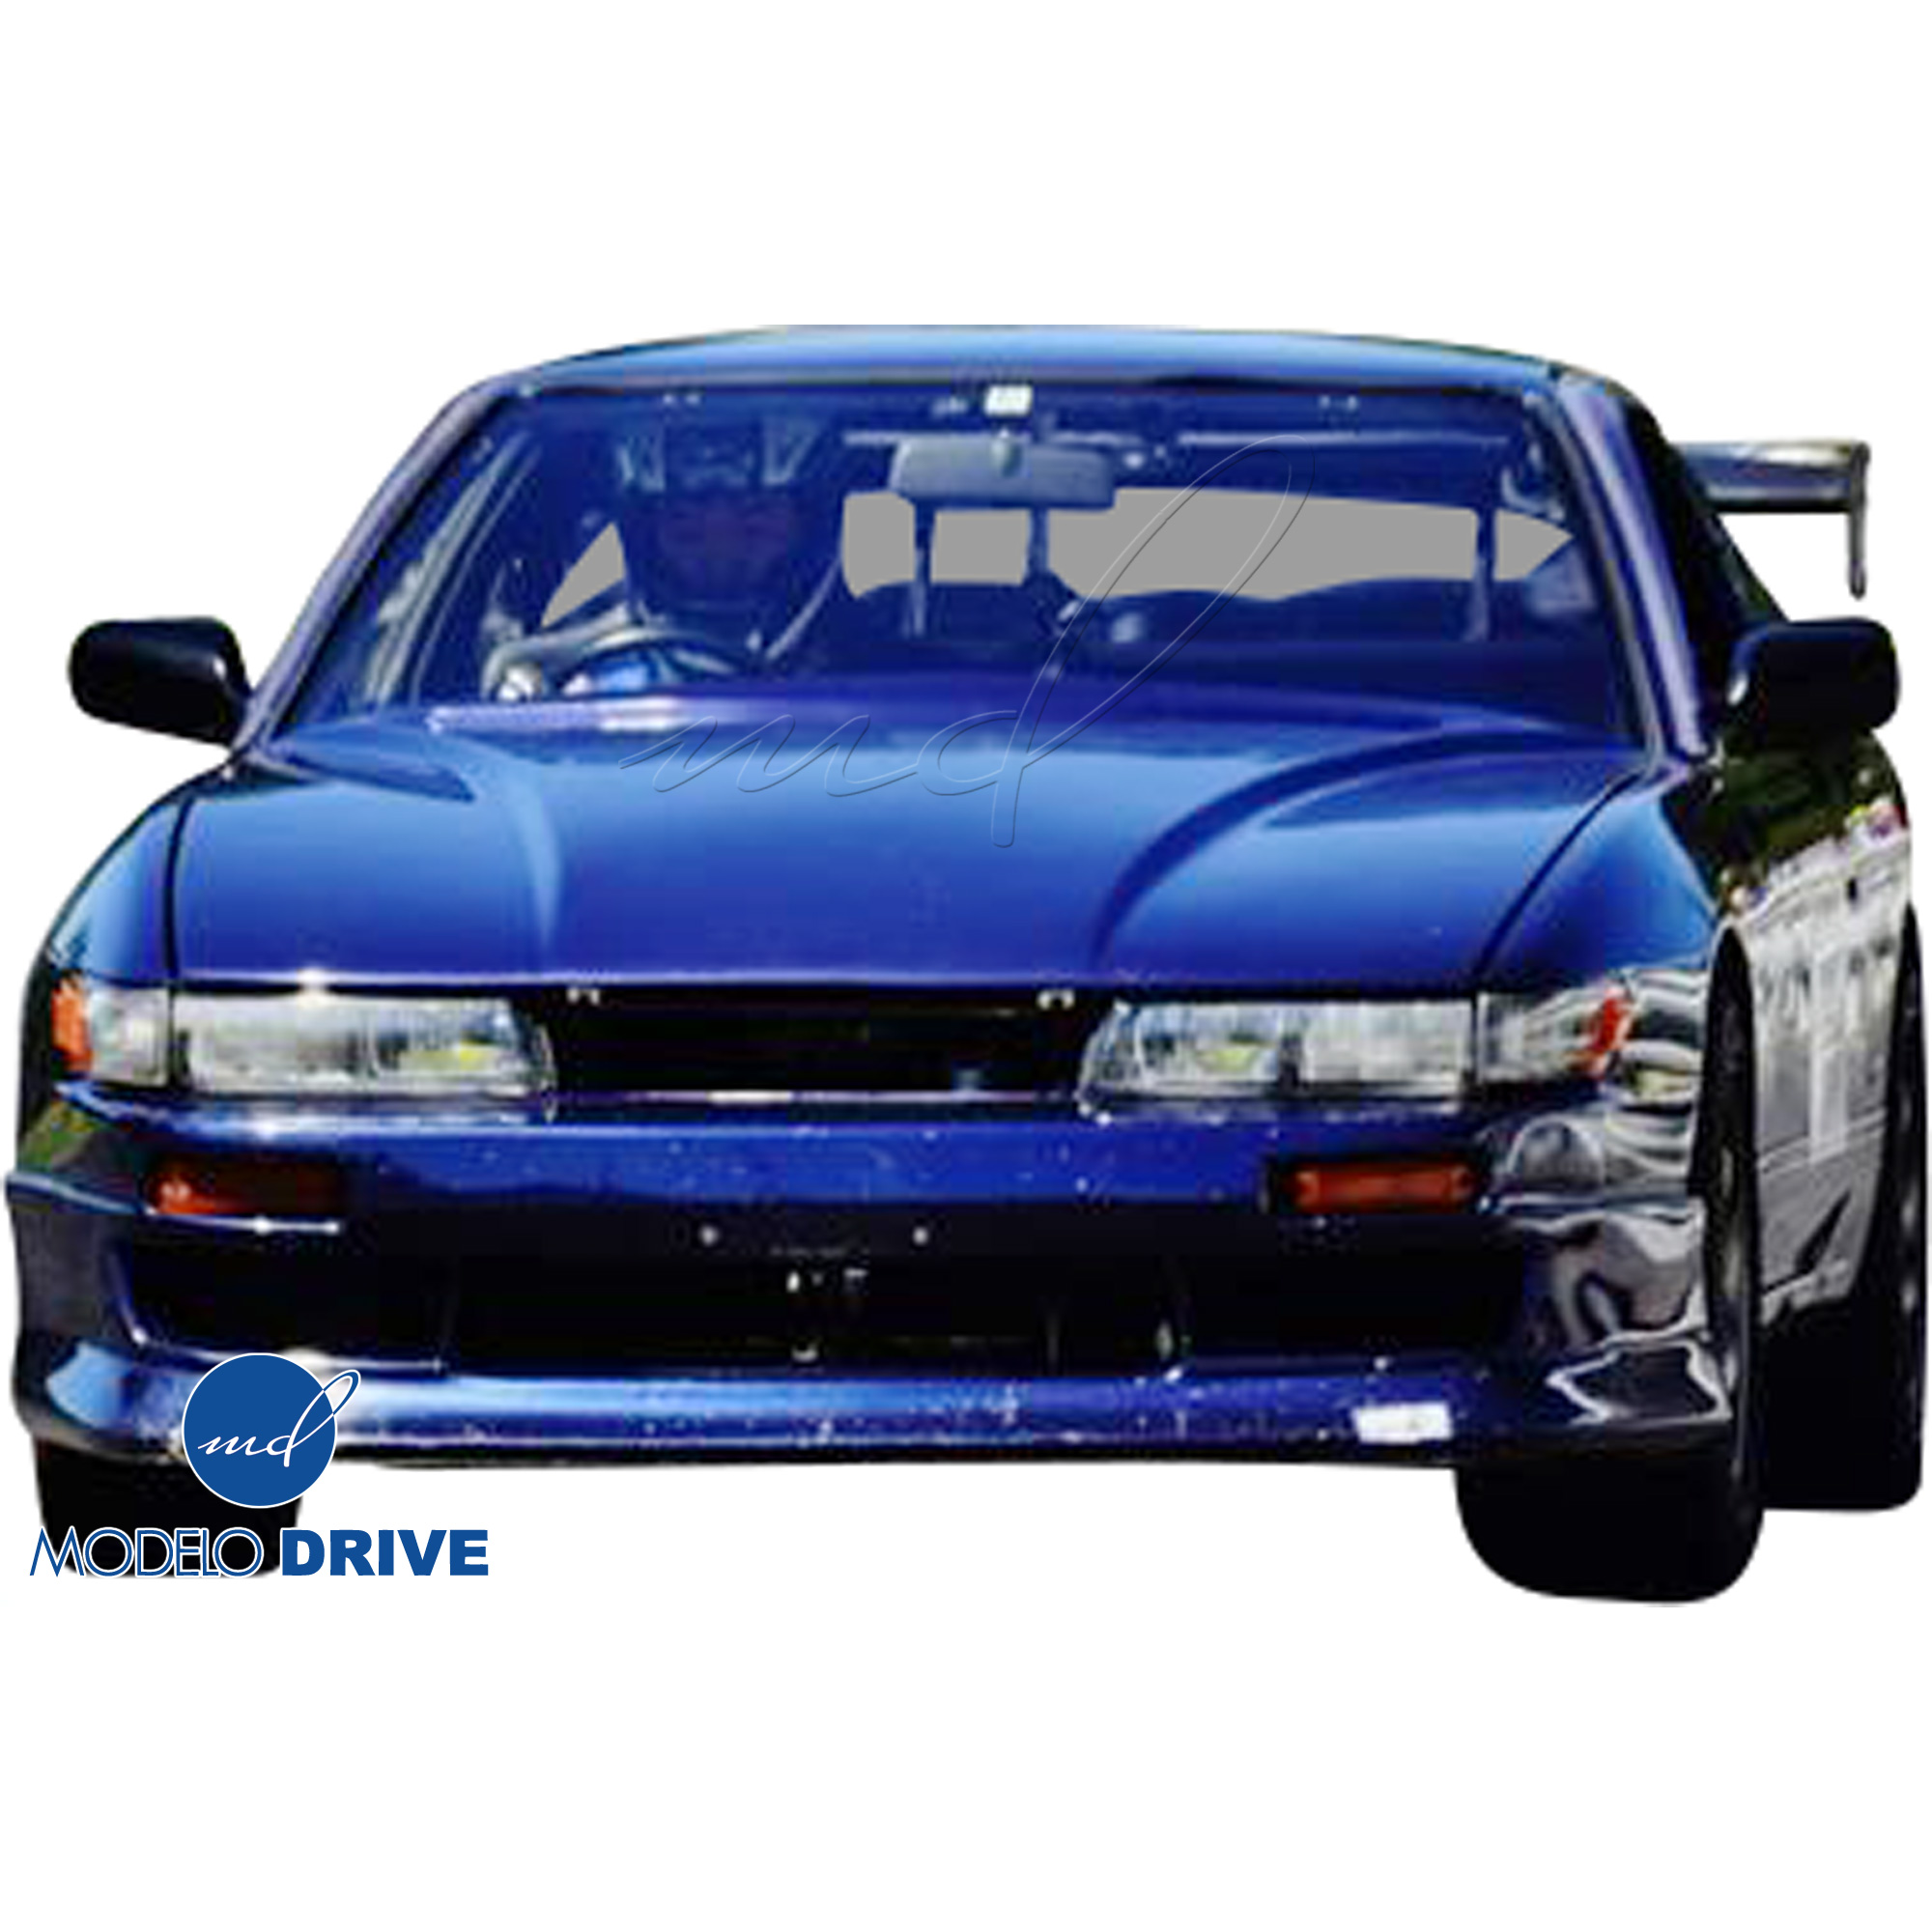 ModeloDrive FRP ORI v2 Hood > Nissan Silvia S13 1989-1994 - Image 36